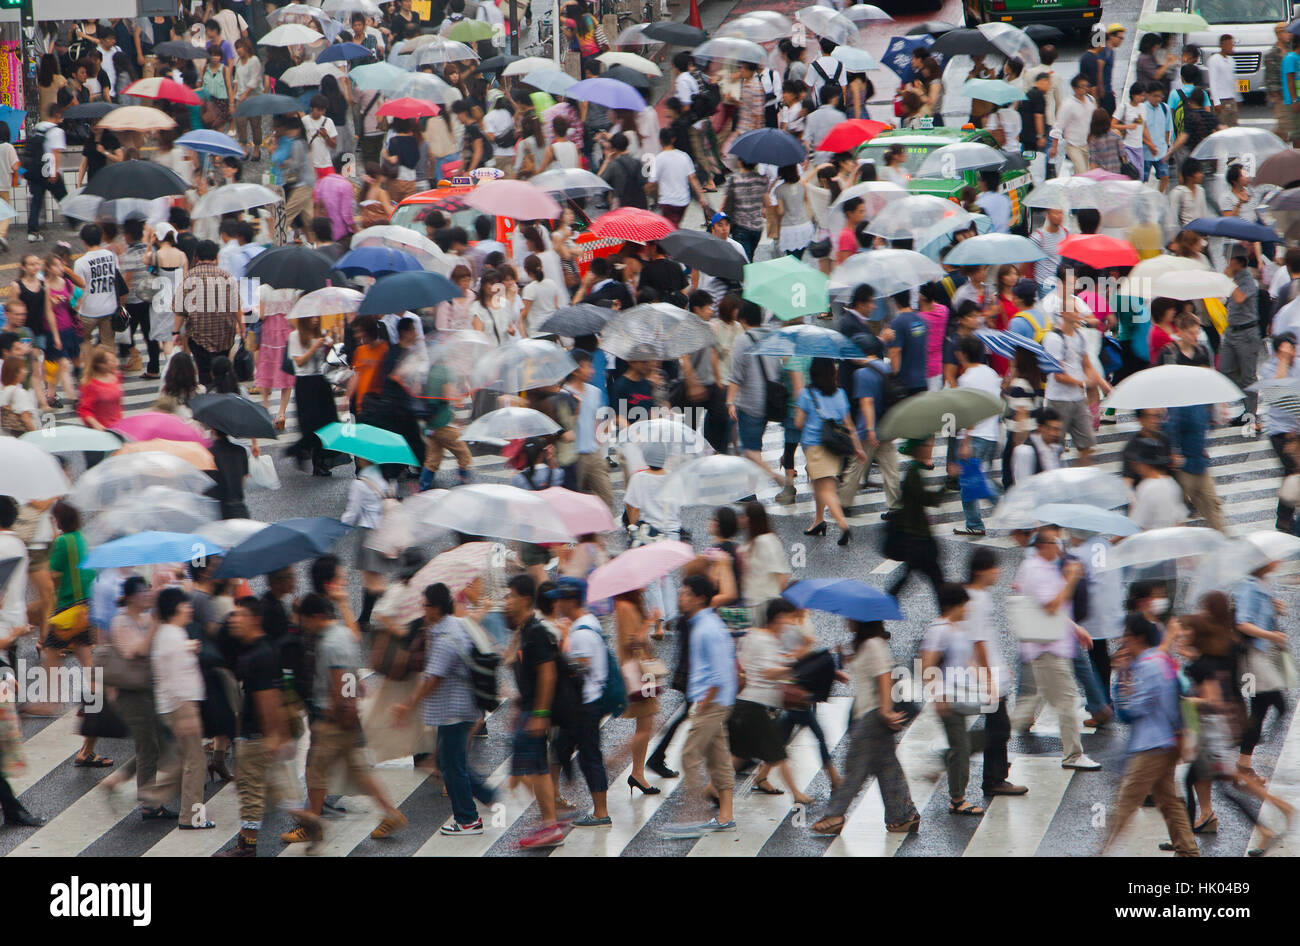 Masse, überfüllt, Rush Hour, Überbevölkerung, Zebrastreifen, Hachiko Square, Shibuya. Tokyo City, Japan, Asien Stockfoto